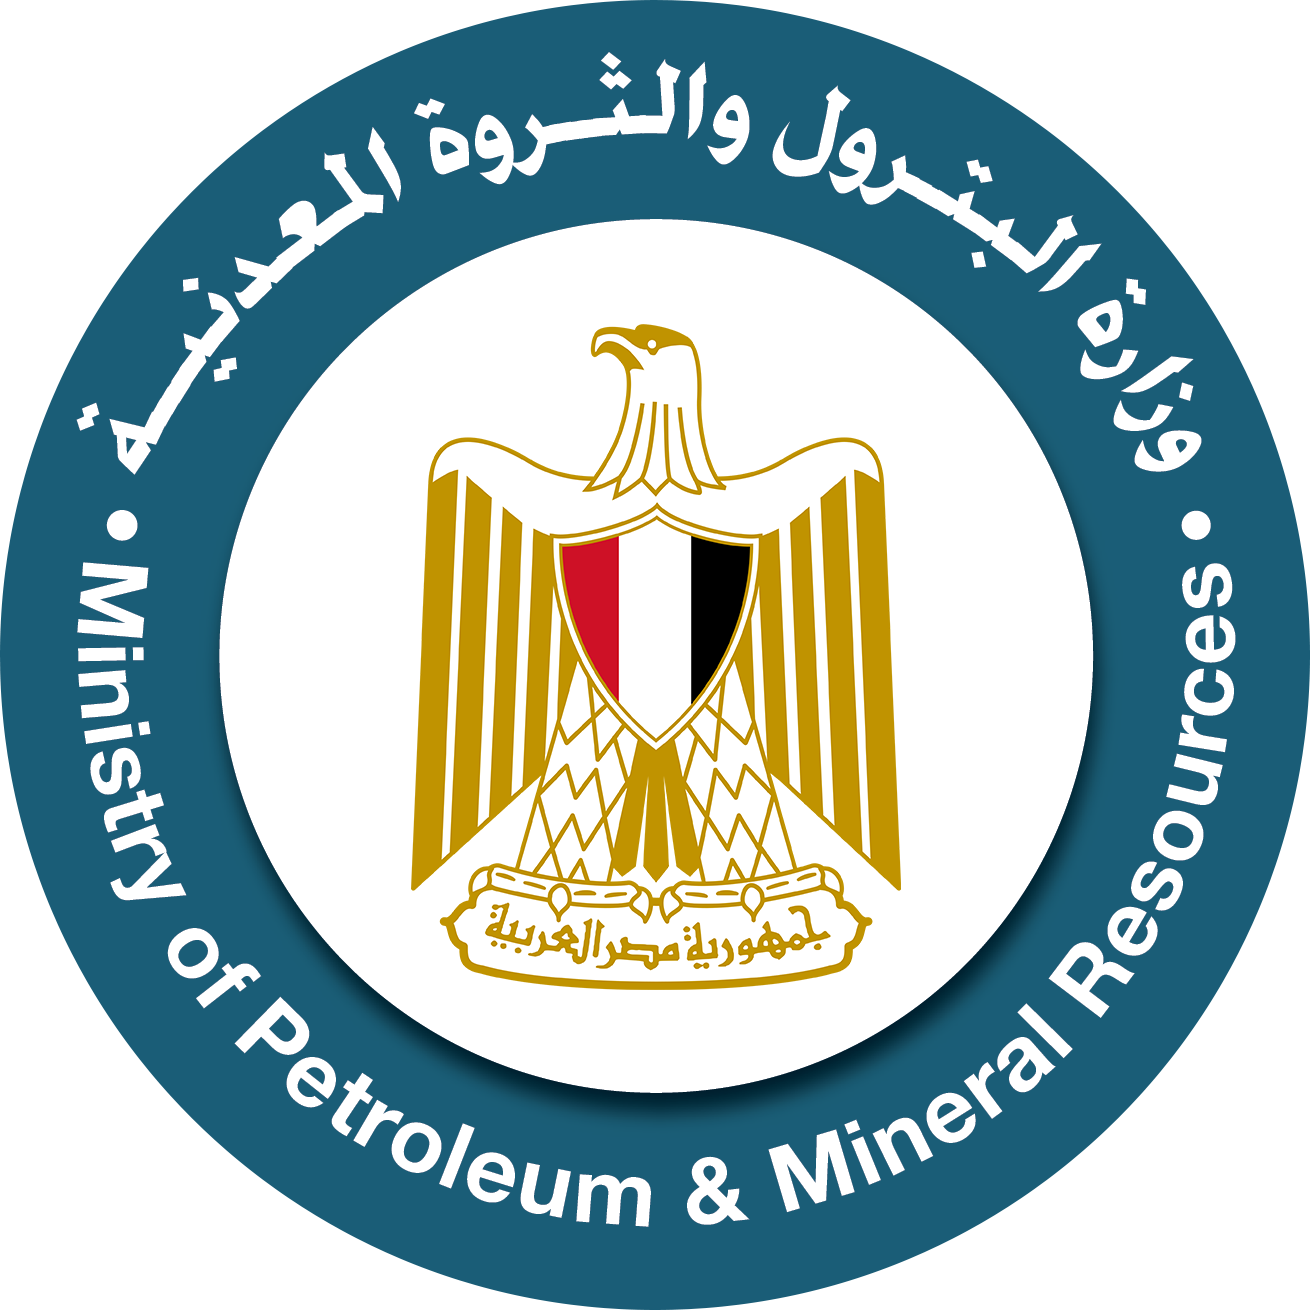 Ministry of Petroleum (Egypt) - Wikipedia